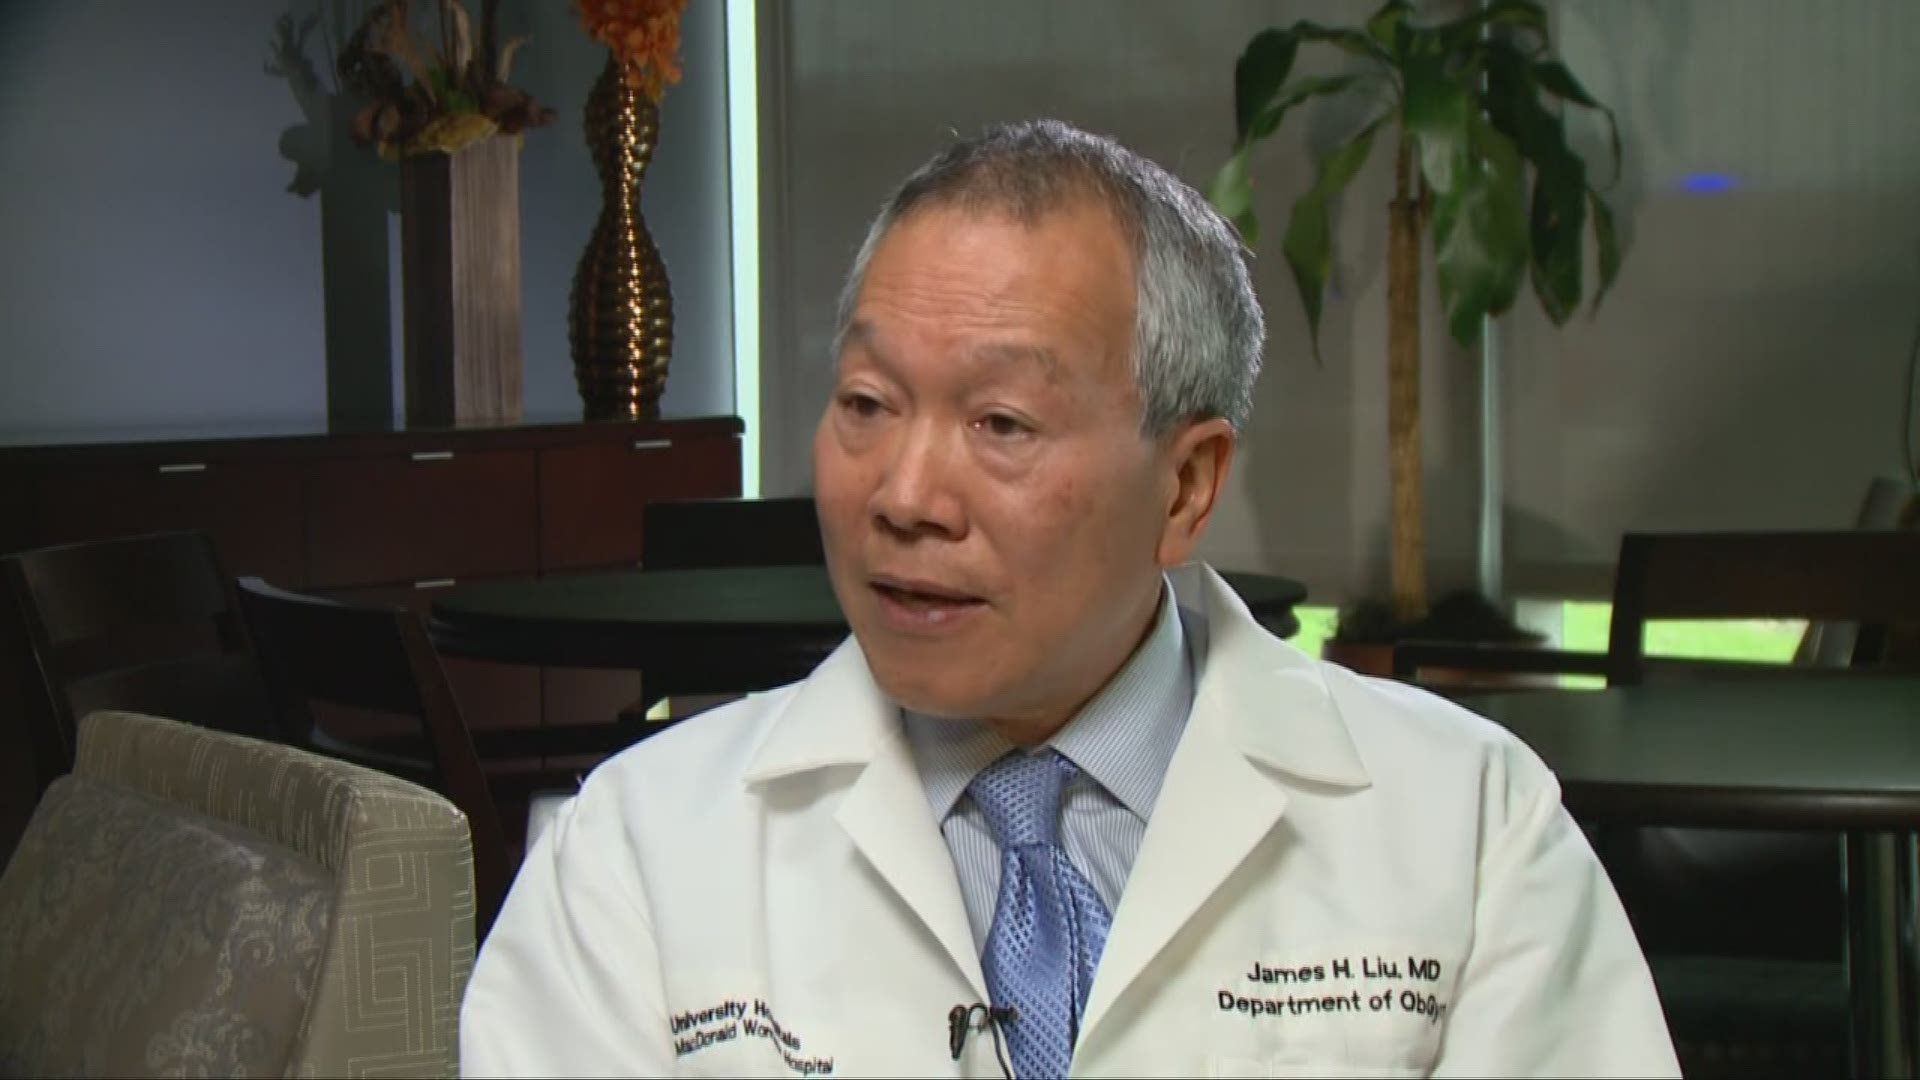 Dr. James Liu replaces Dr. James Goldfarb as head of University Hospitals Fertility Clinic